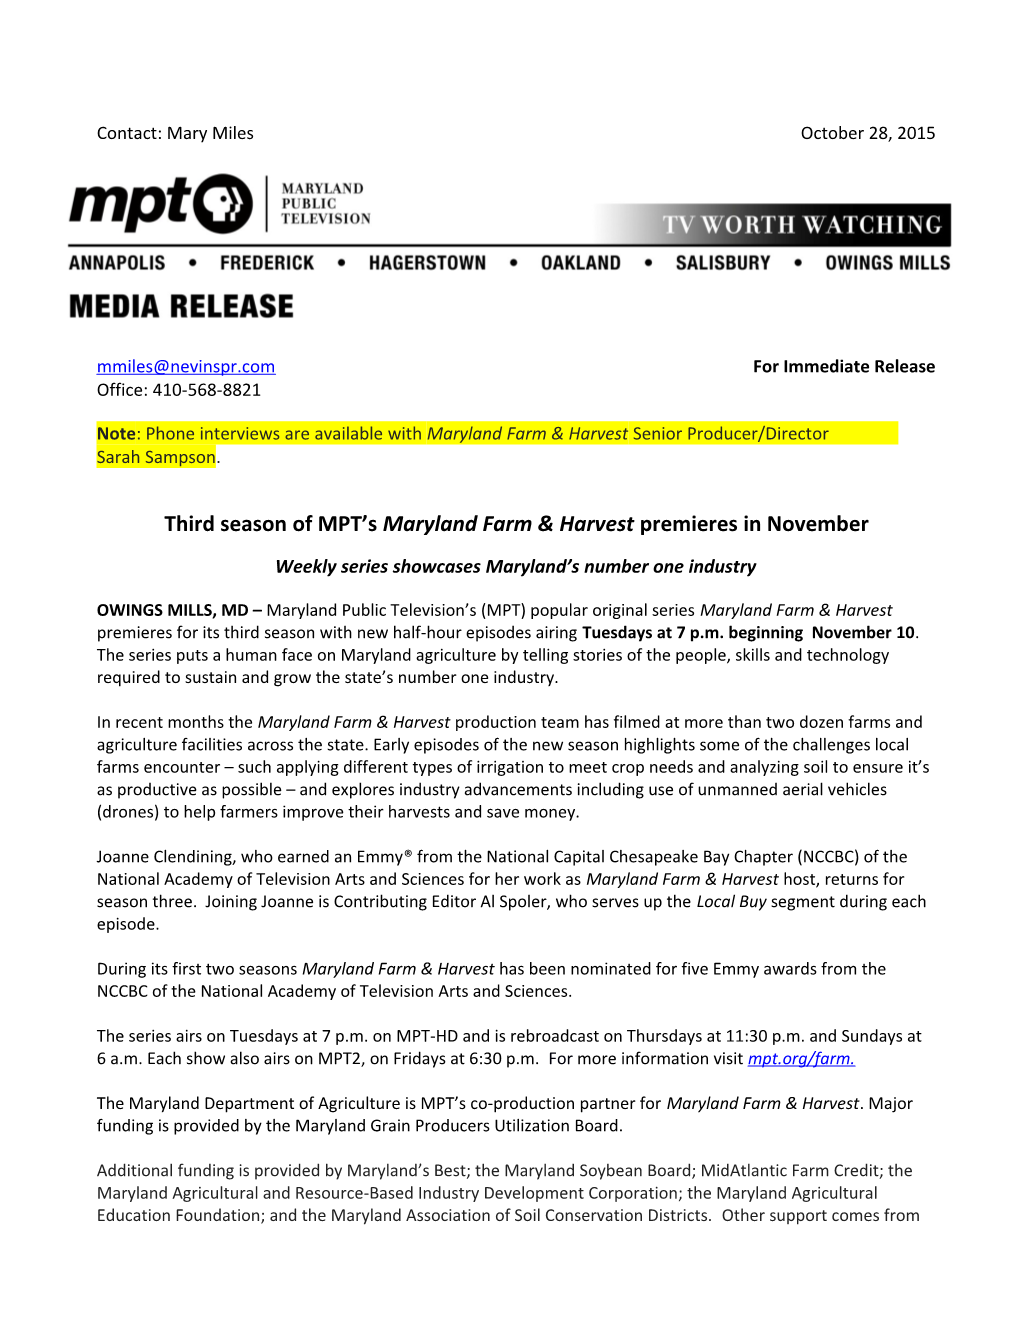 Third Season of MPT S Maryland Farm & Harvestpremieres in November